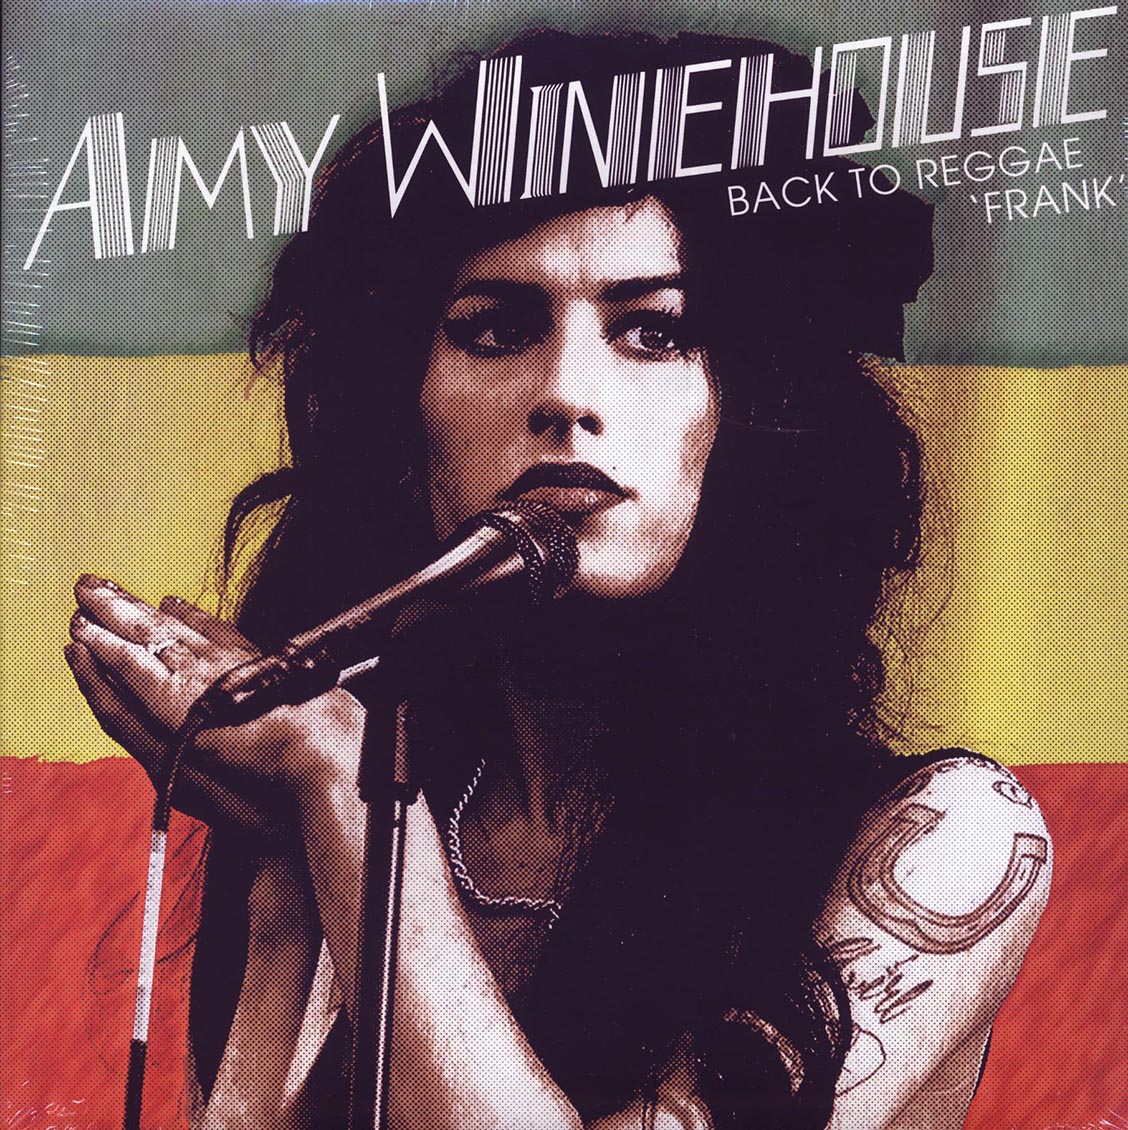 Amy Winehouse - Live At Glastonbury 2007 (vinilo, Lp Vinyl)